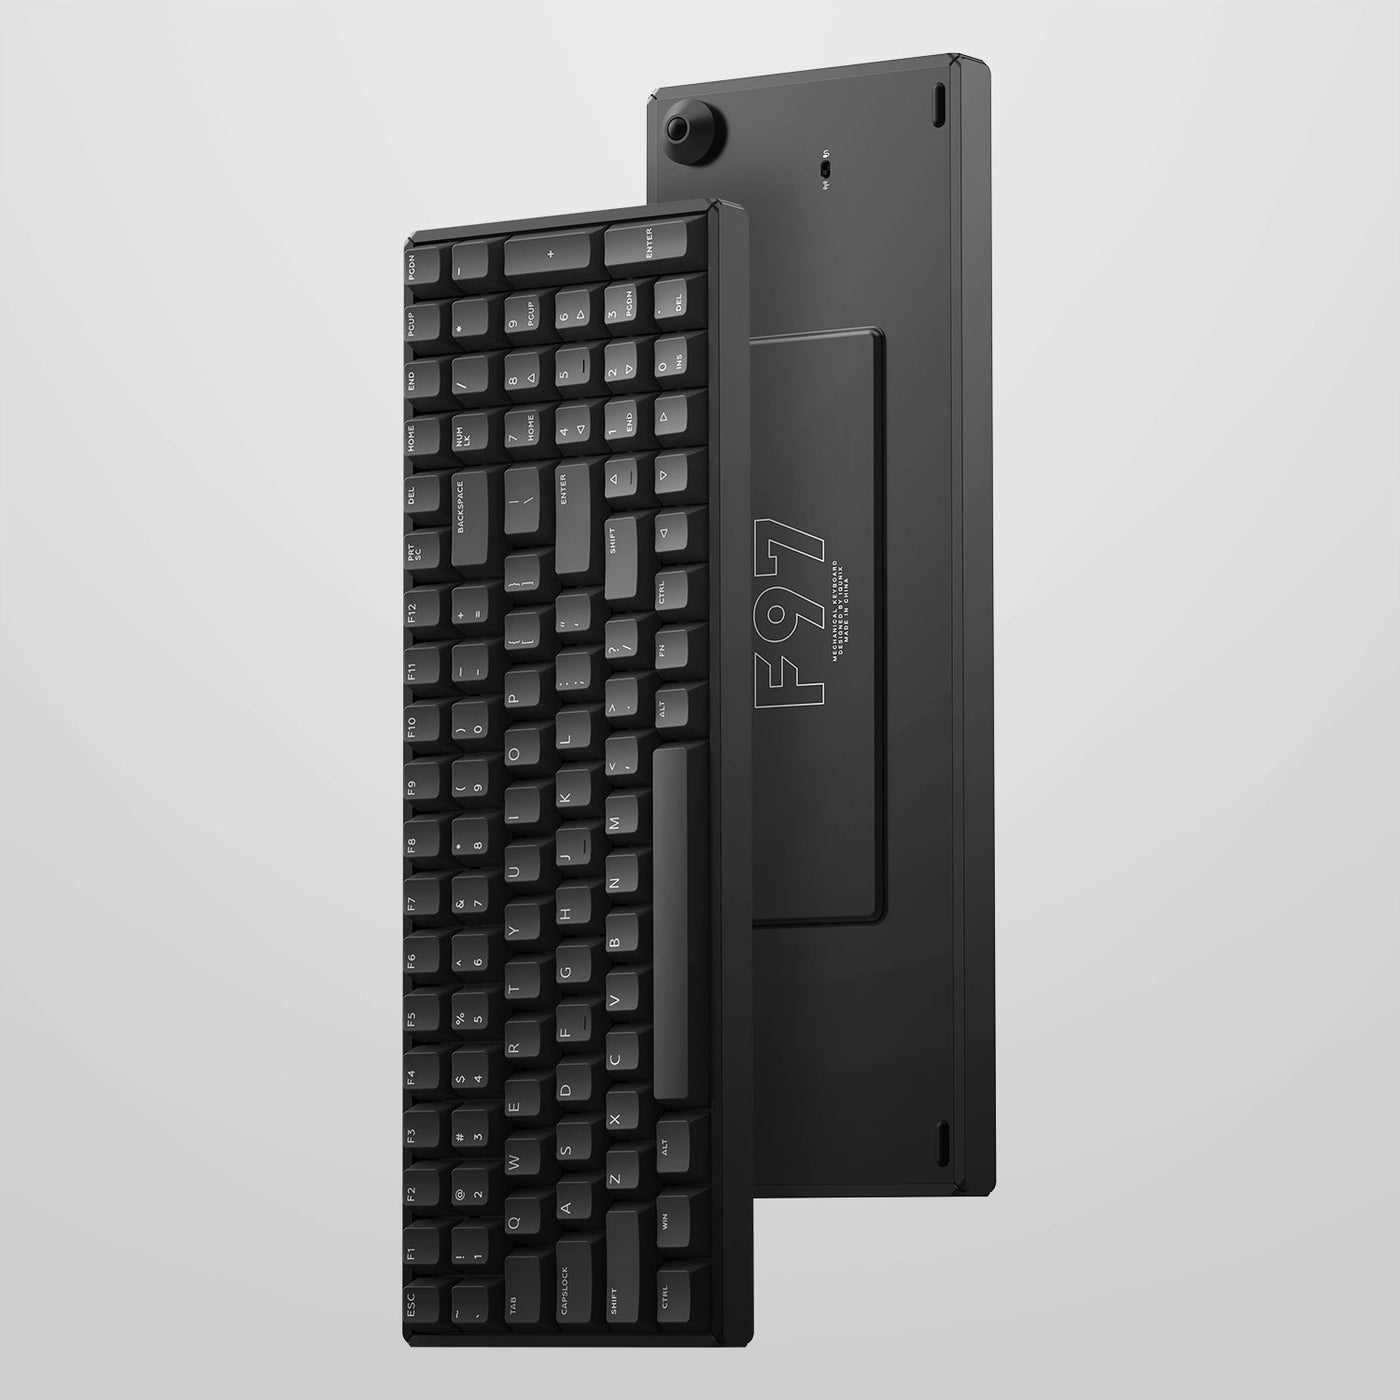 IQUNIX F97 all black Wireless Mechanical Keyboard